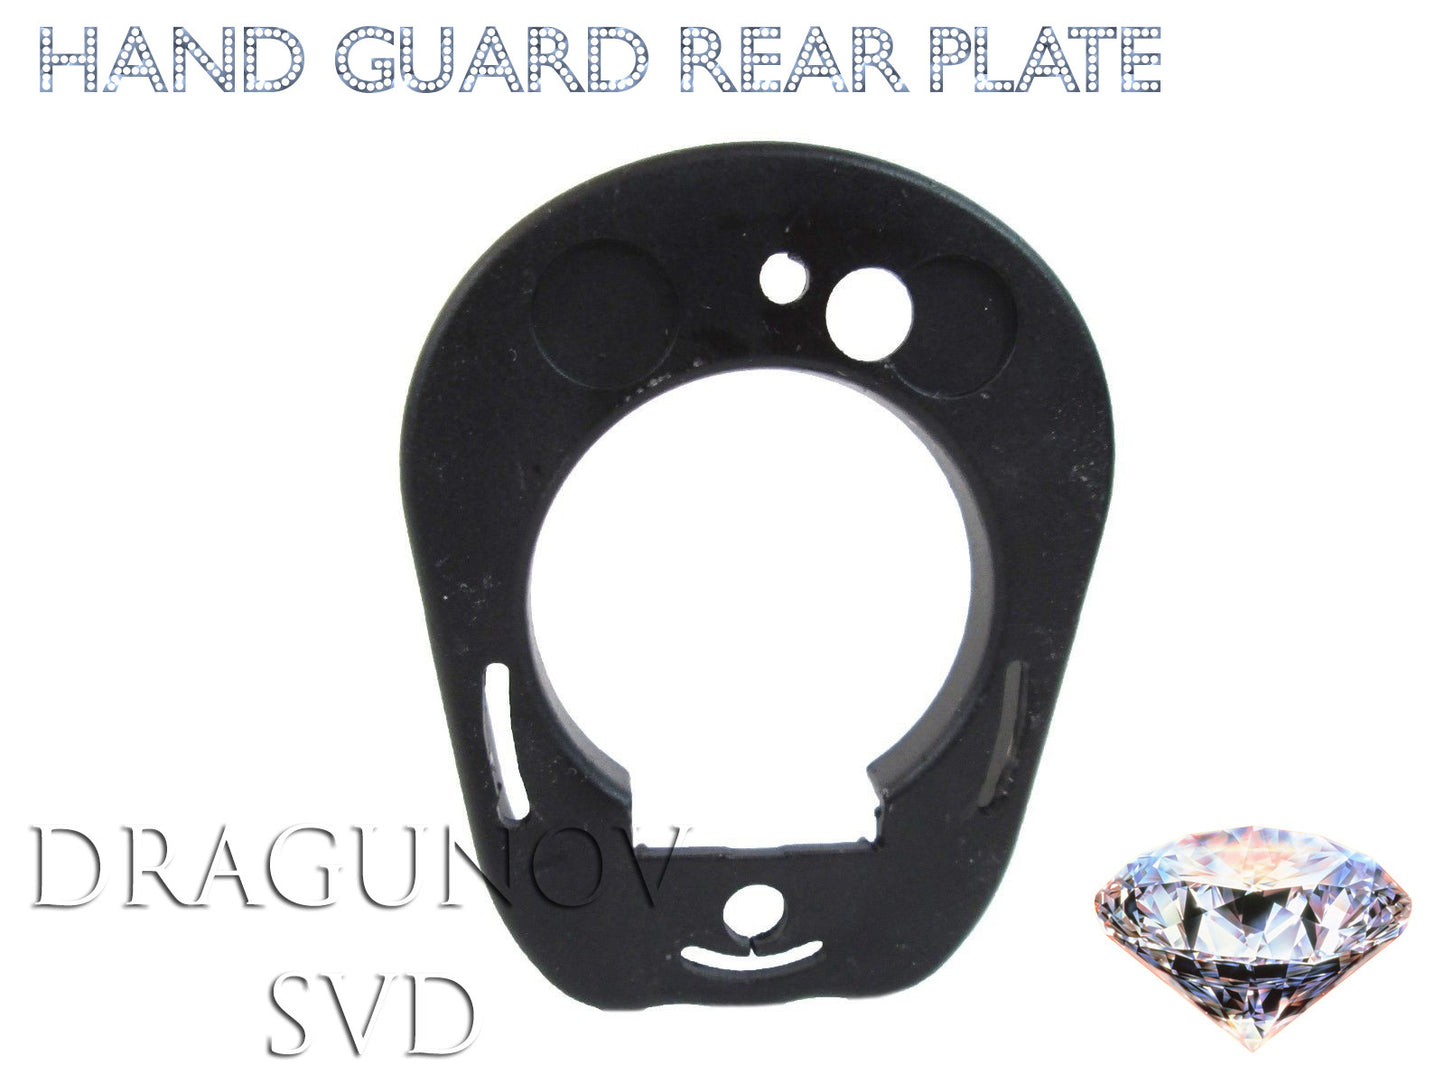 Dragunov SVD Rear Hand Guard Plate